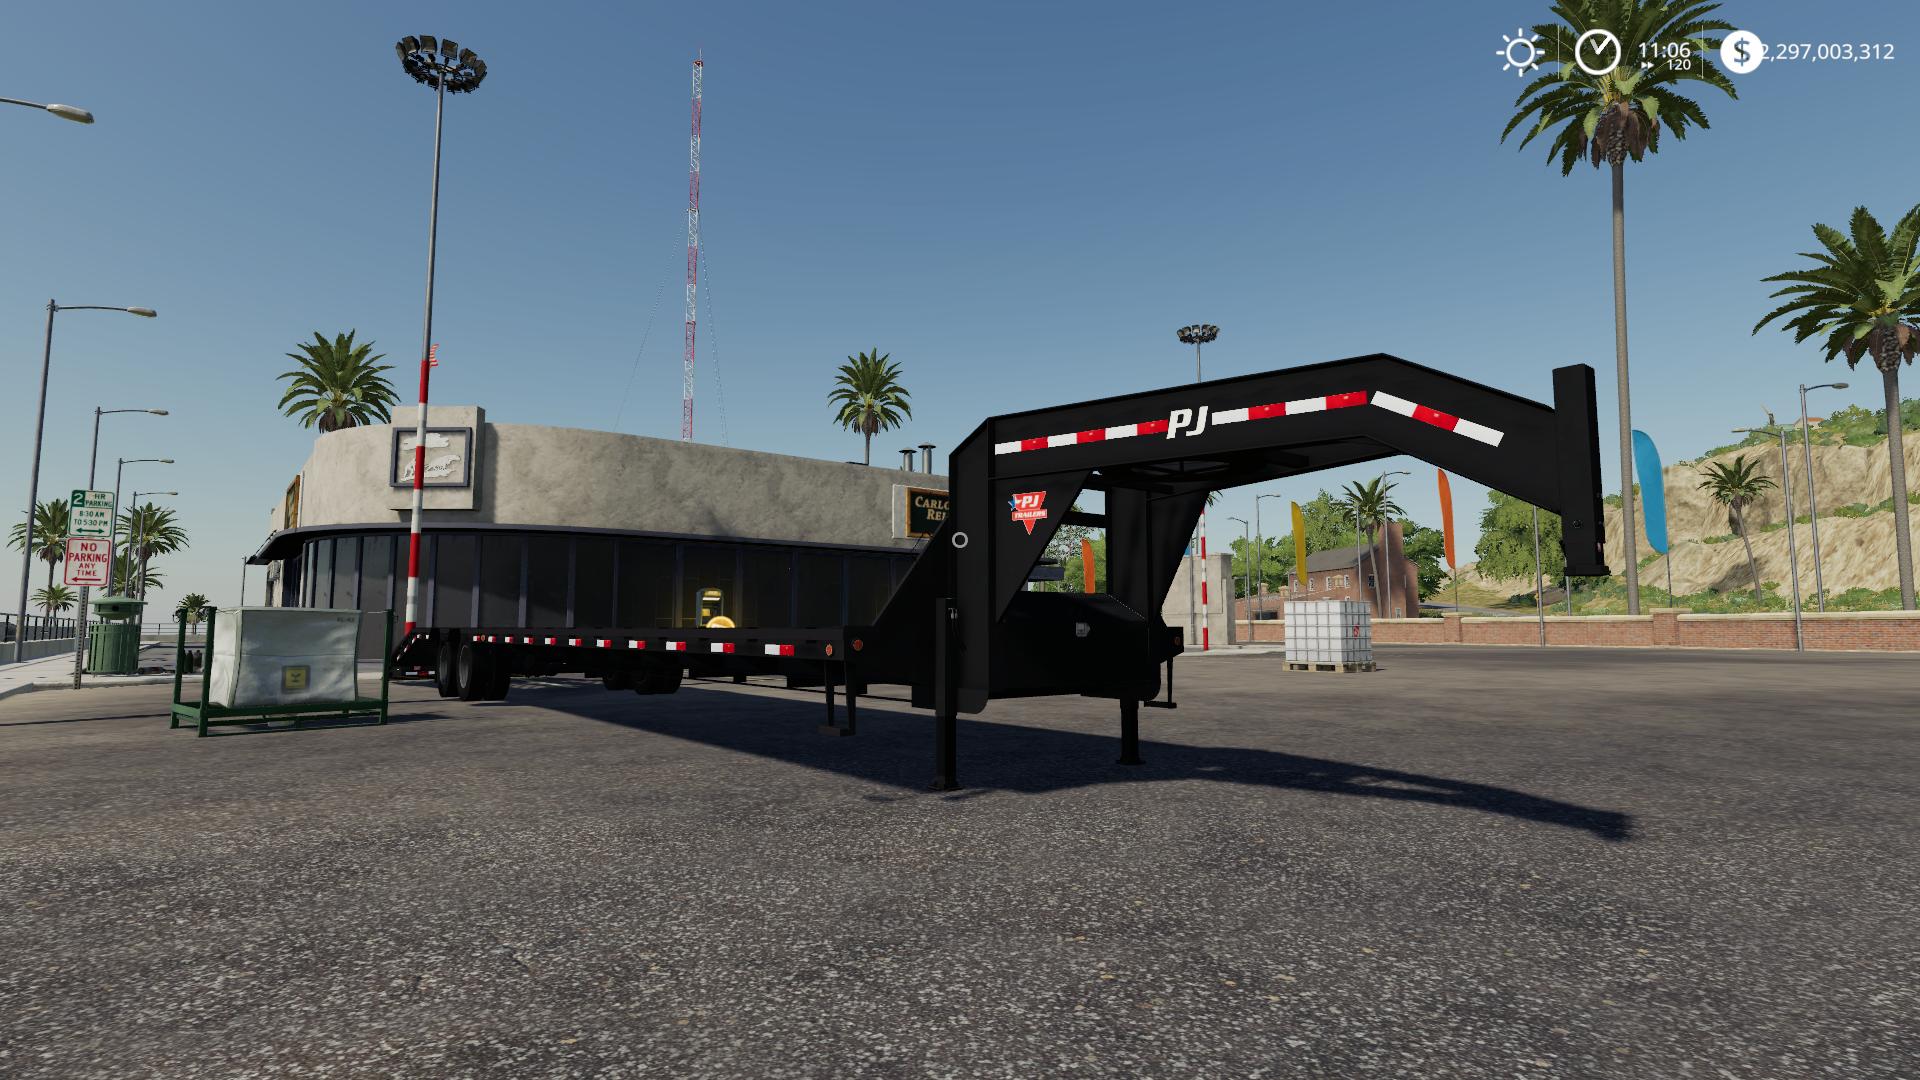 fs19 equipment trailer mod